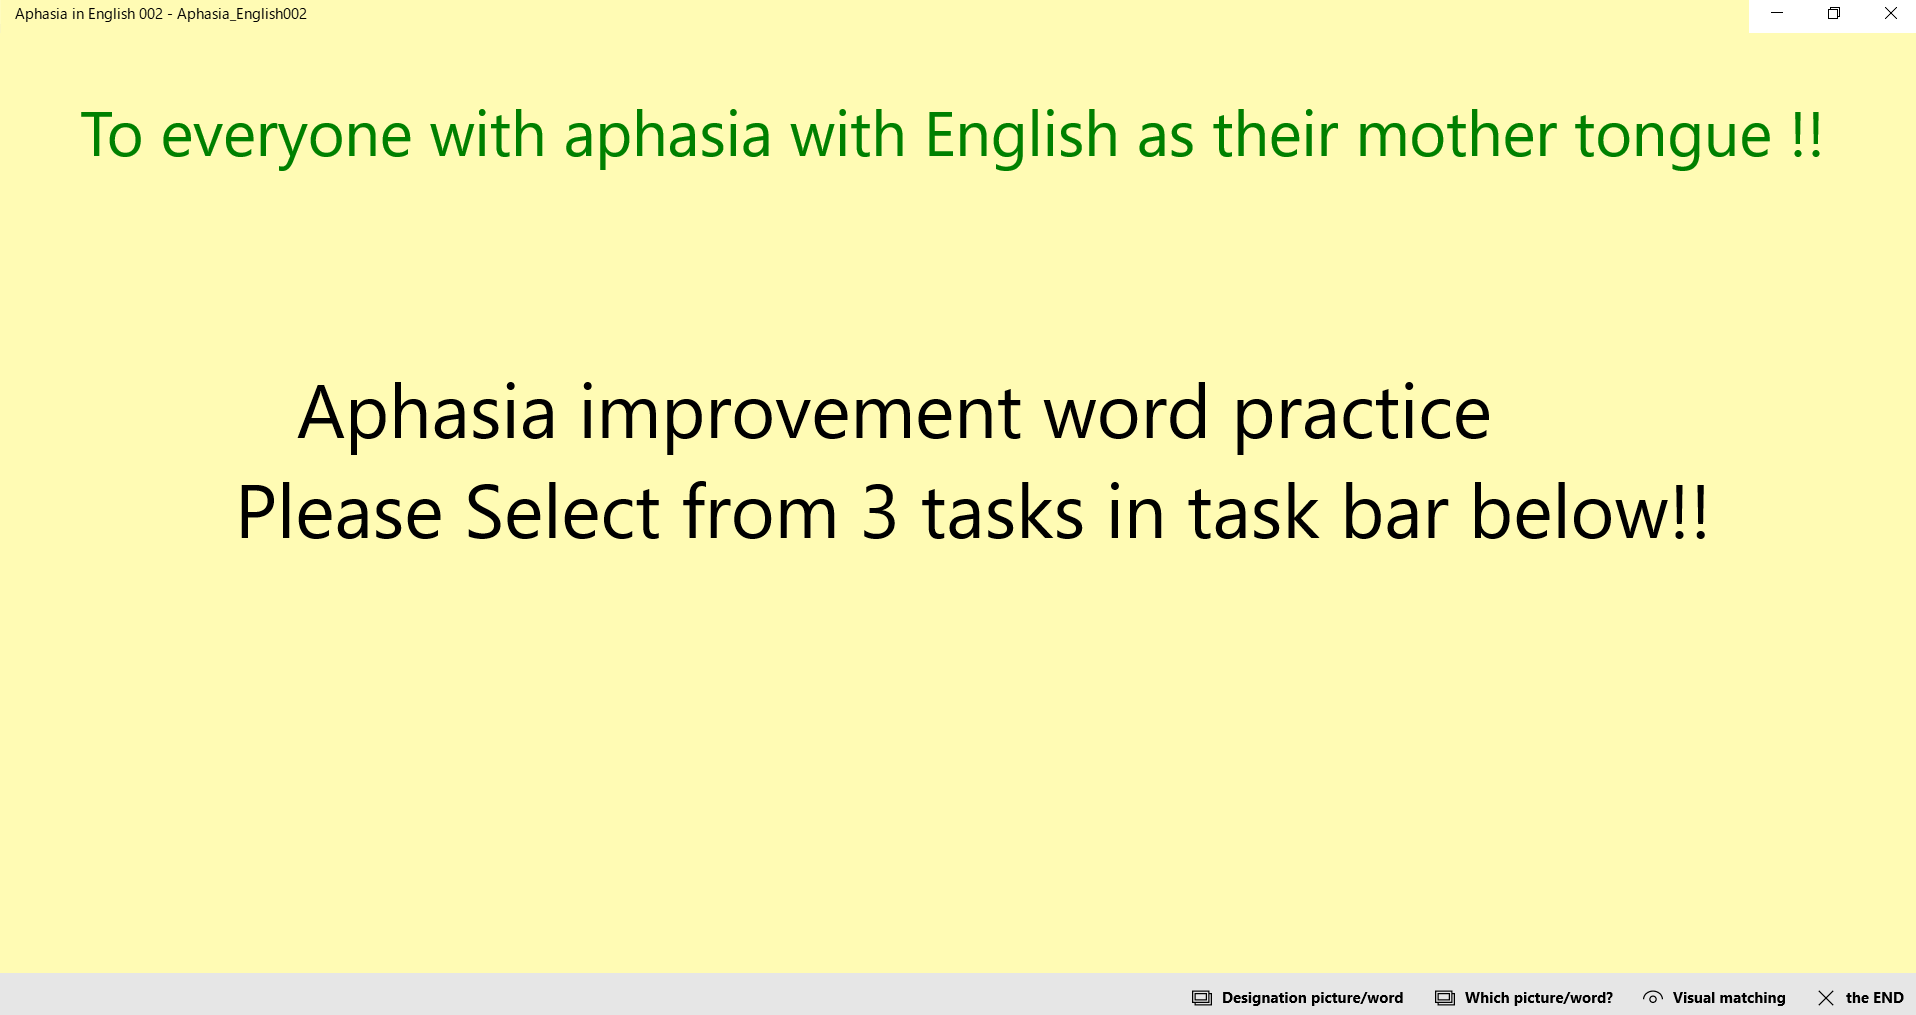 Aphasia_English002